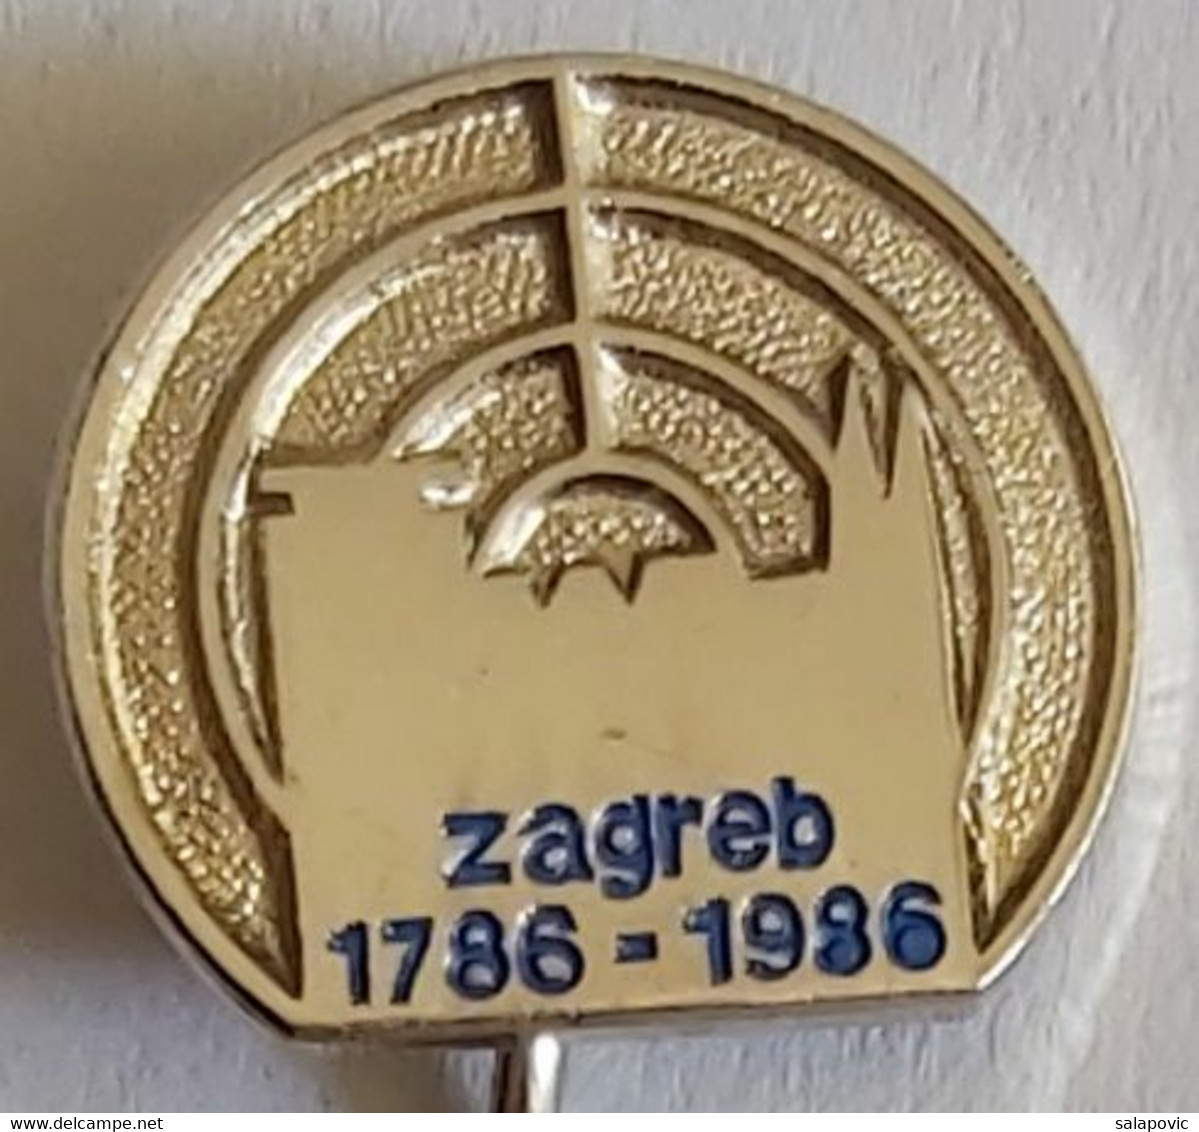 Zagreb 1786 - 1986 Croatia Archery Zagreb Shooting Association PIN A6/2 - Archery